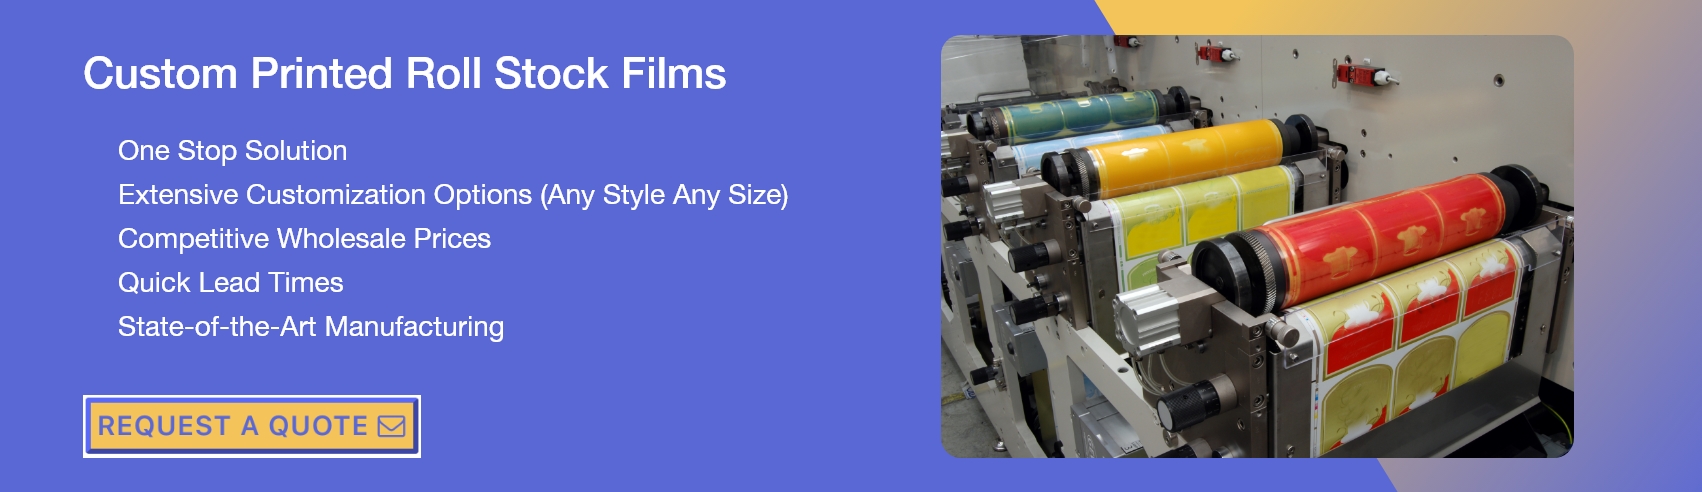 Custom Printed Roll Stock Films